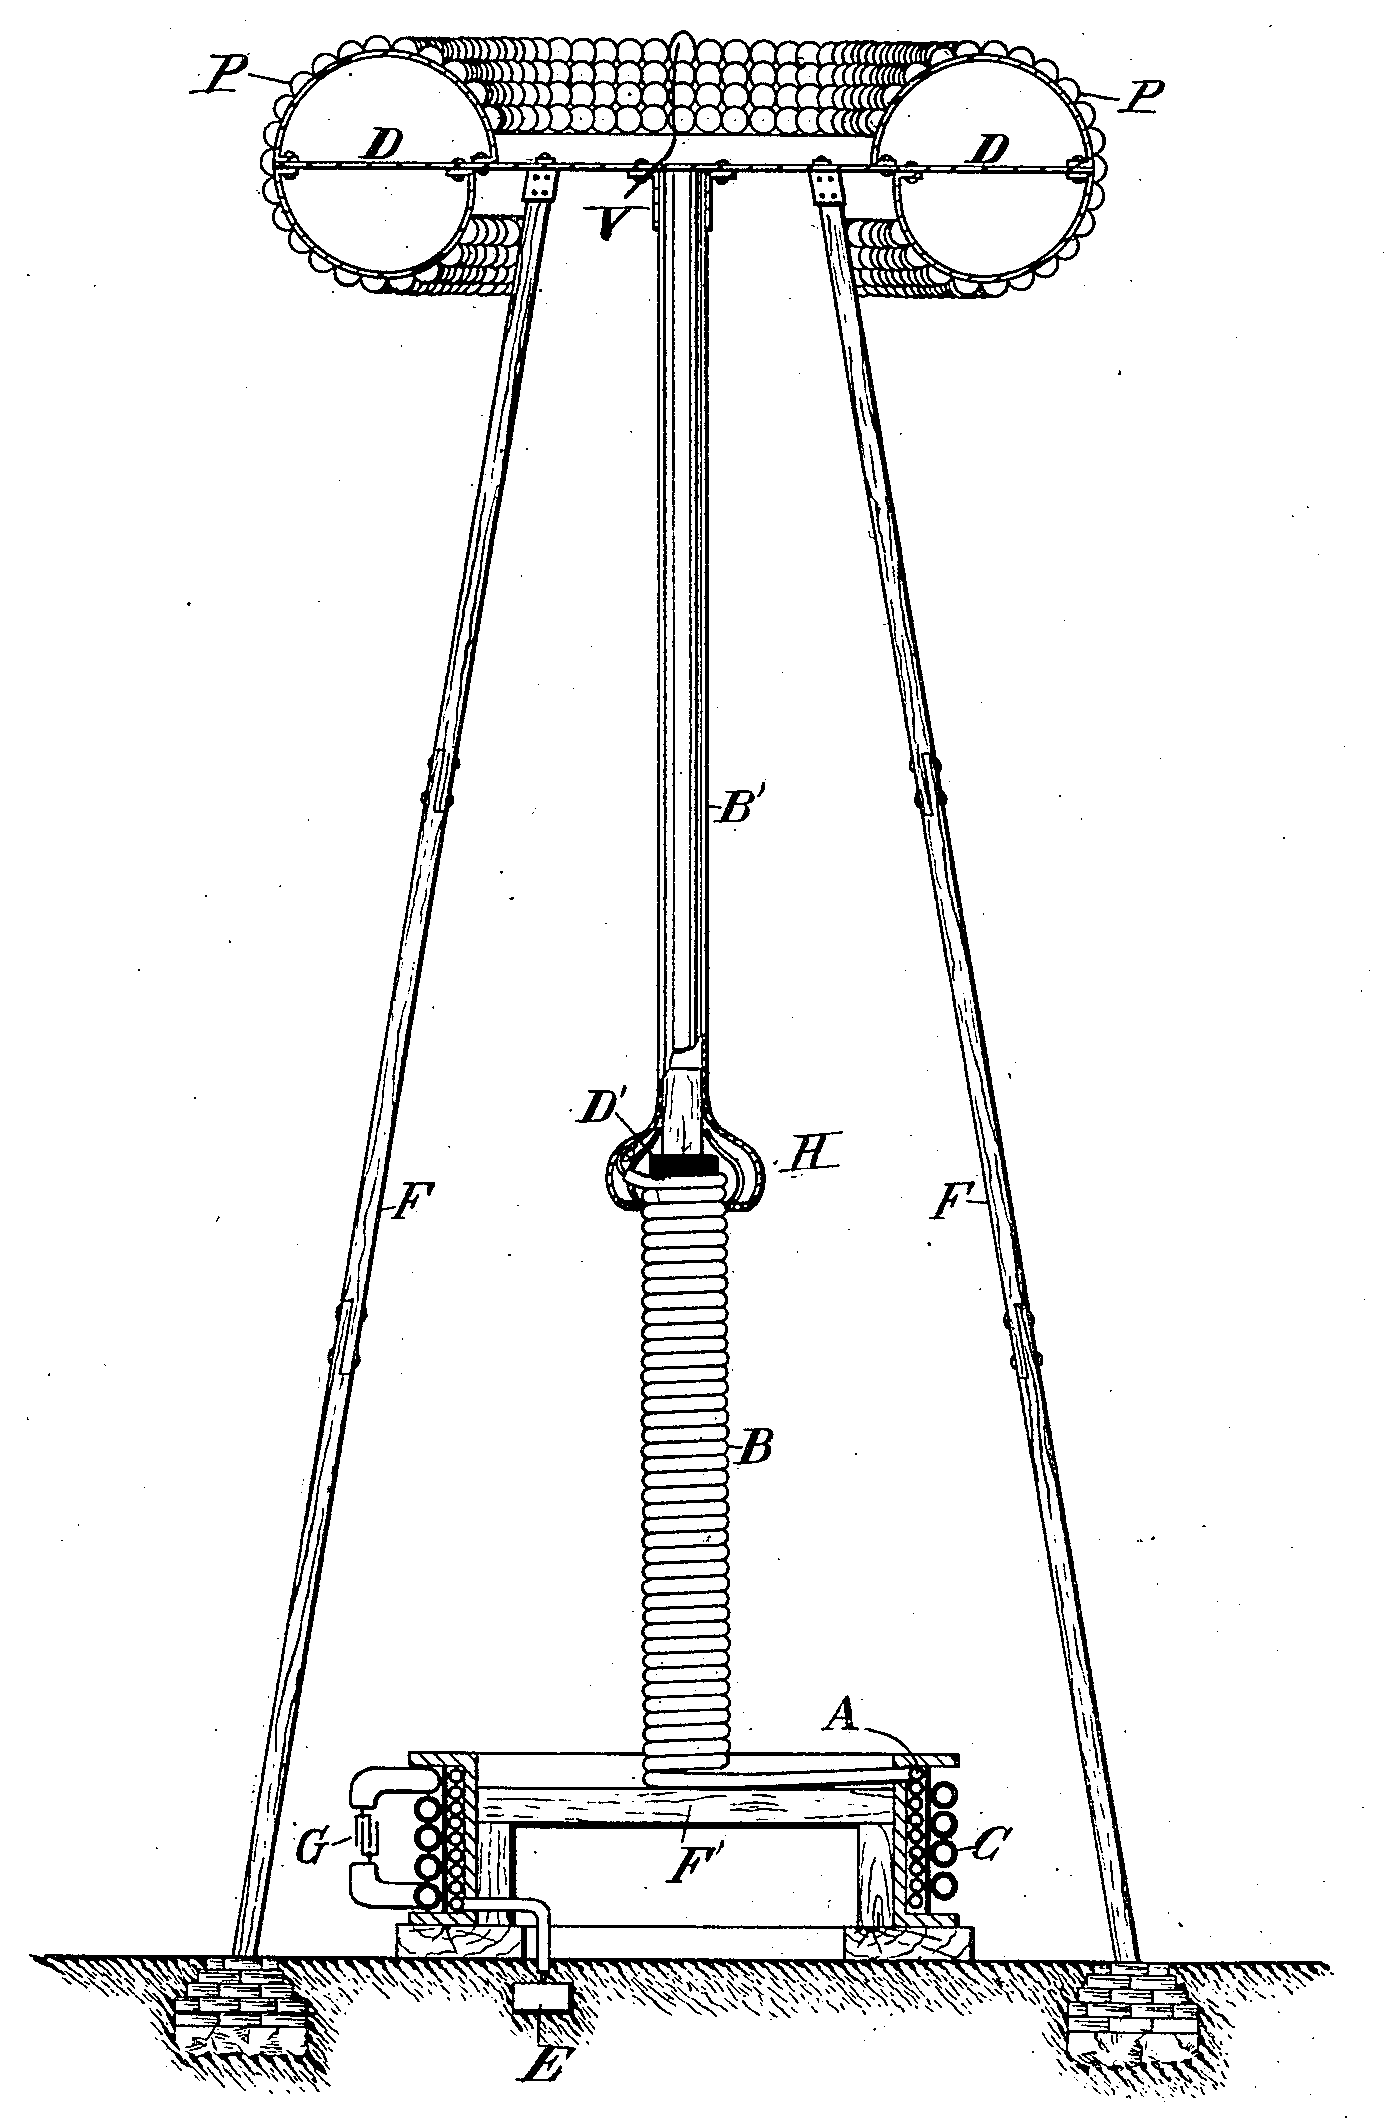 Illustration from Nikola Tesla's US Patent 1,119,732: Apparatus for transmitting electrical energy.